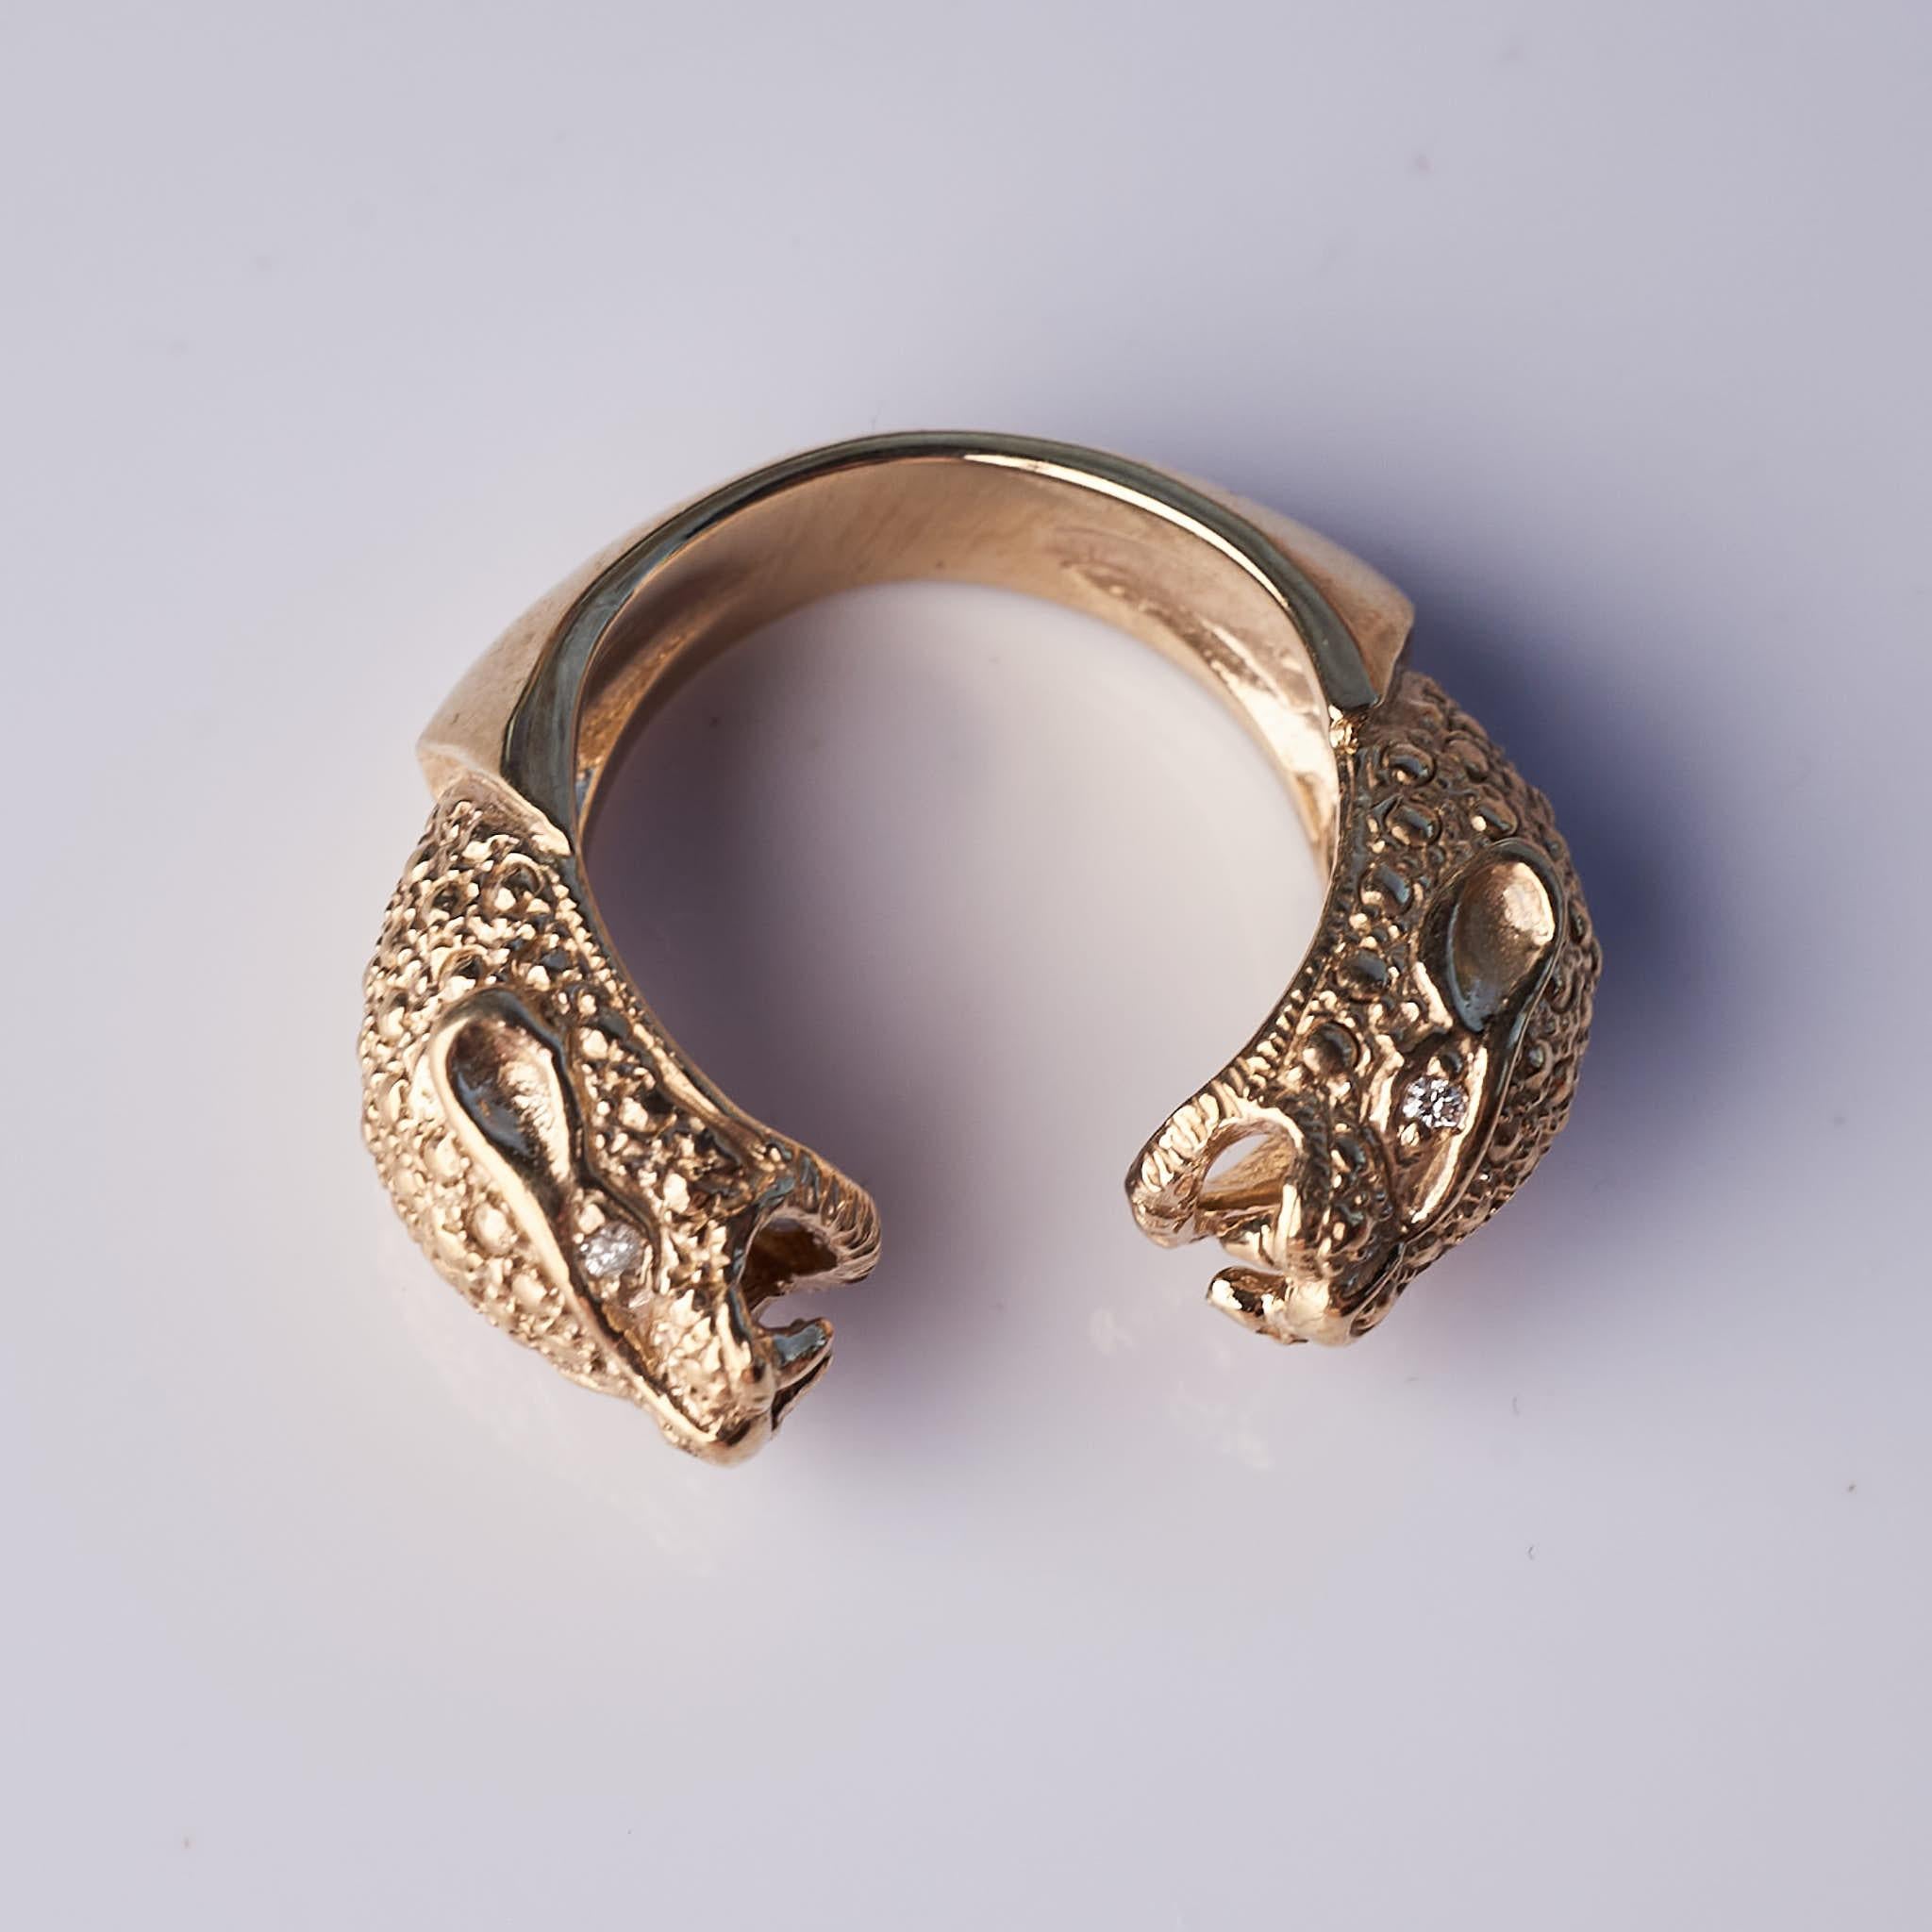 Brilliant Cut White Diamond Jaguar Panther Ring Bronze Animal Jewelry J Dauphin For Sale